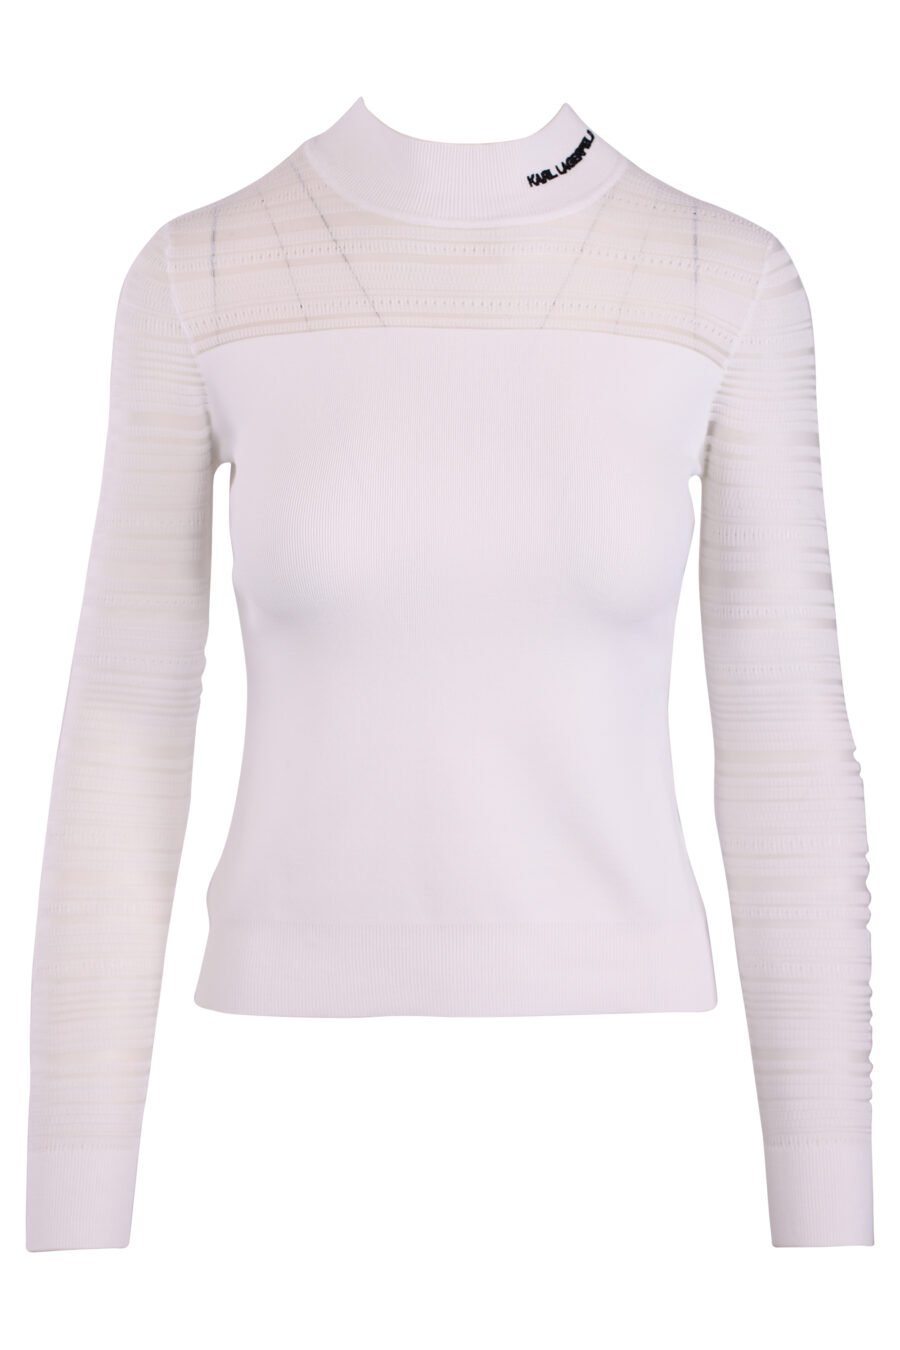 Semitransparentes langärmeliges weißes T-Shirt - IMG 3261